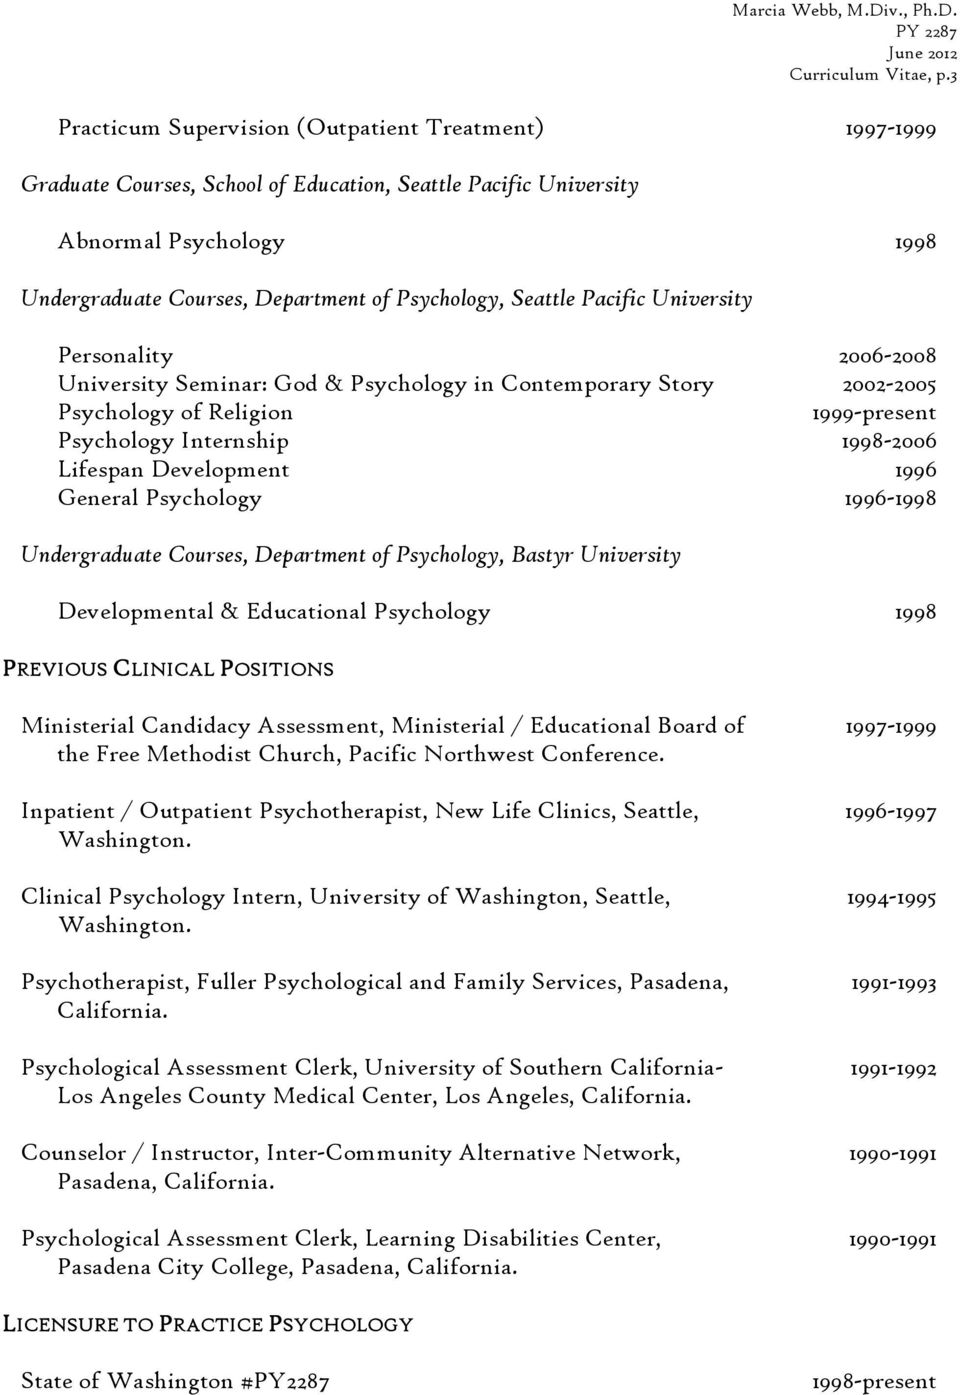 Seattle Pacific University Personality 2006-2008 University Seminar: God & Psychology in Contemporary Story 2002-2005 Psychology of Religion 1999-present Psychology Internship 1998-2006 Lifespan